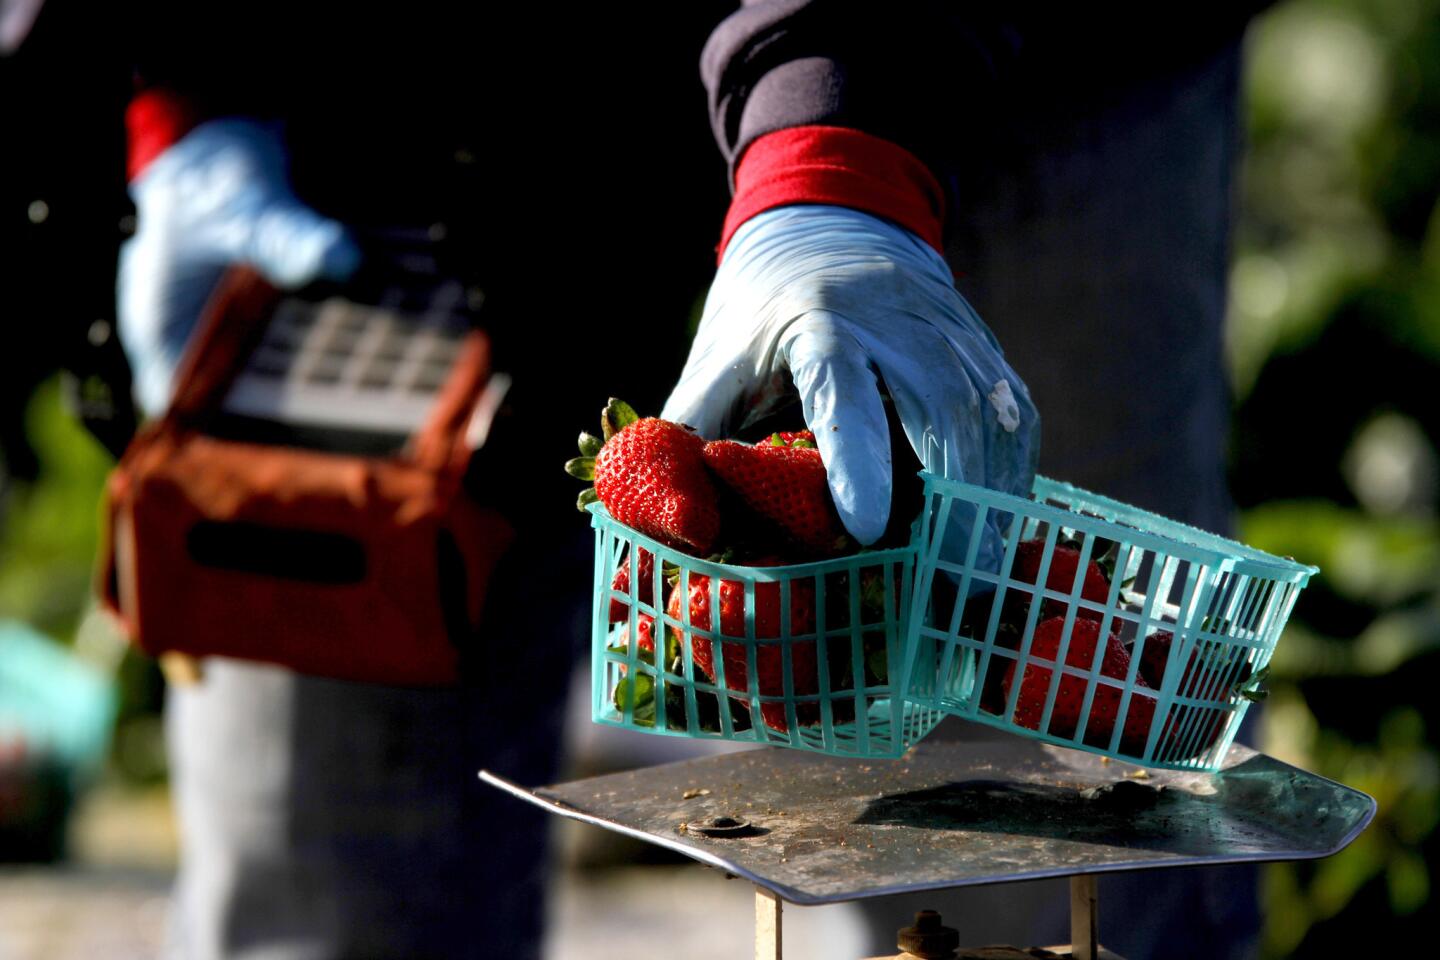 Weighing strawberries